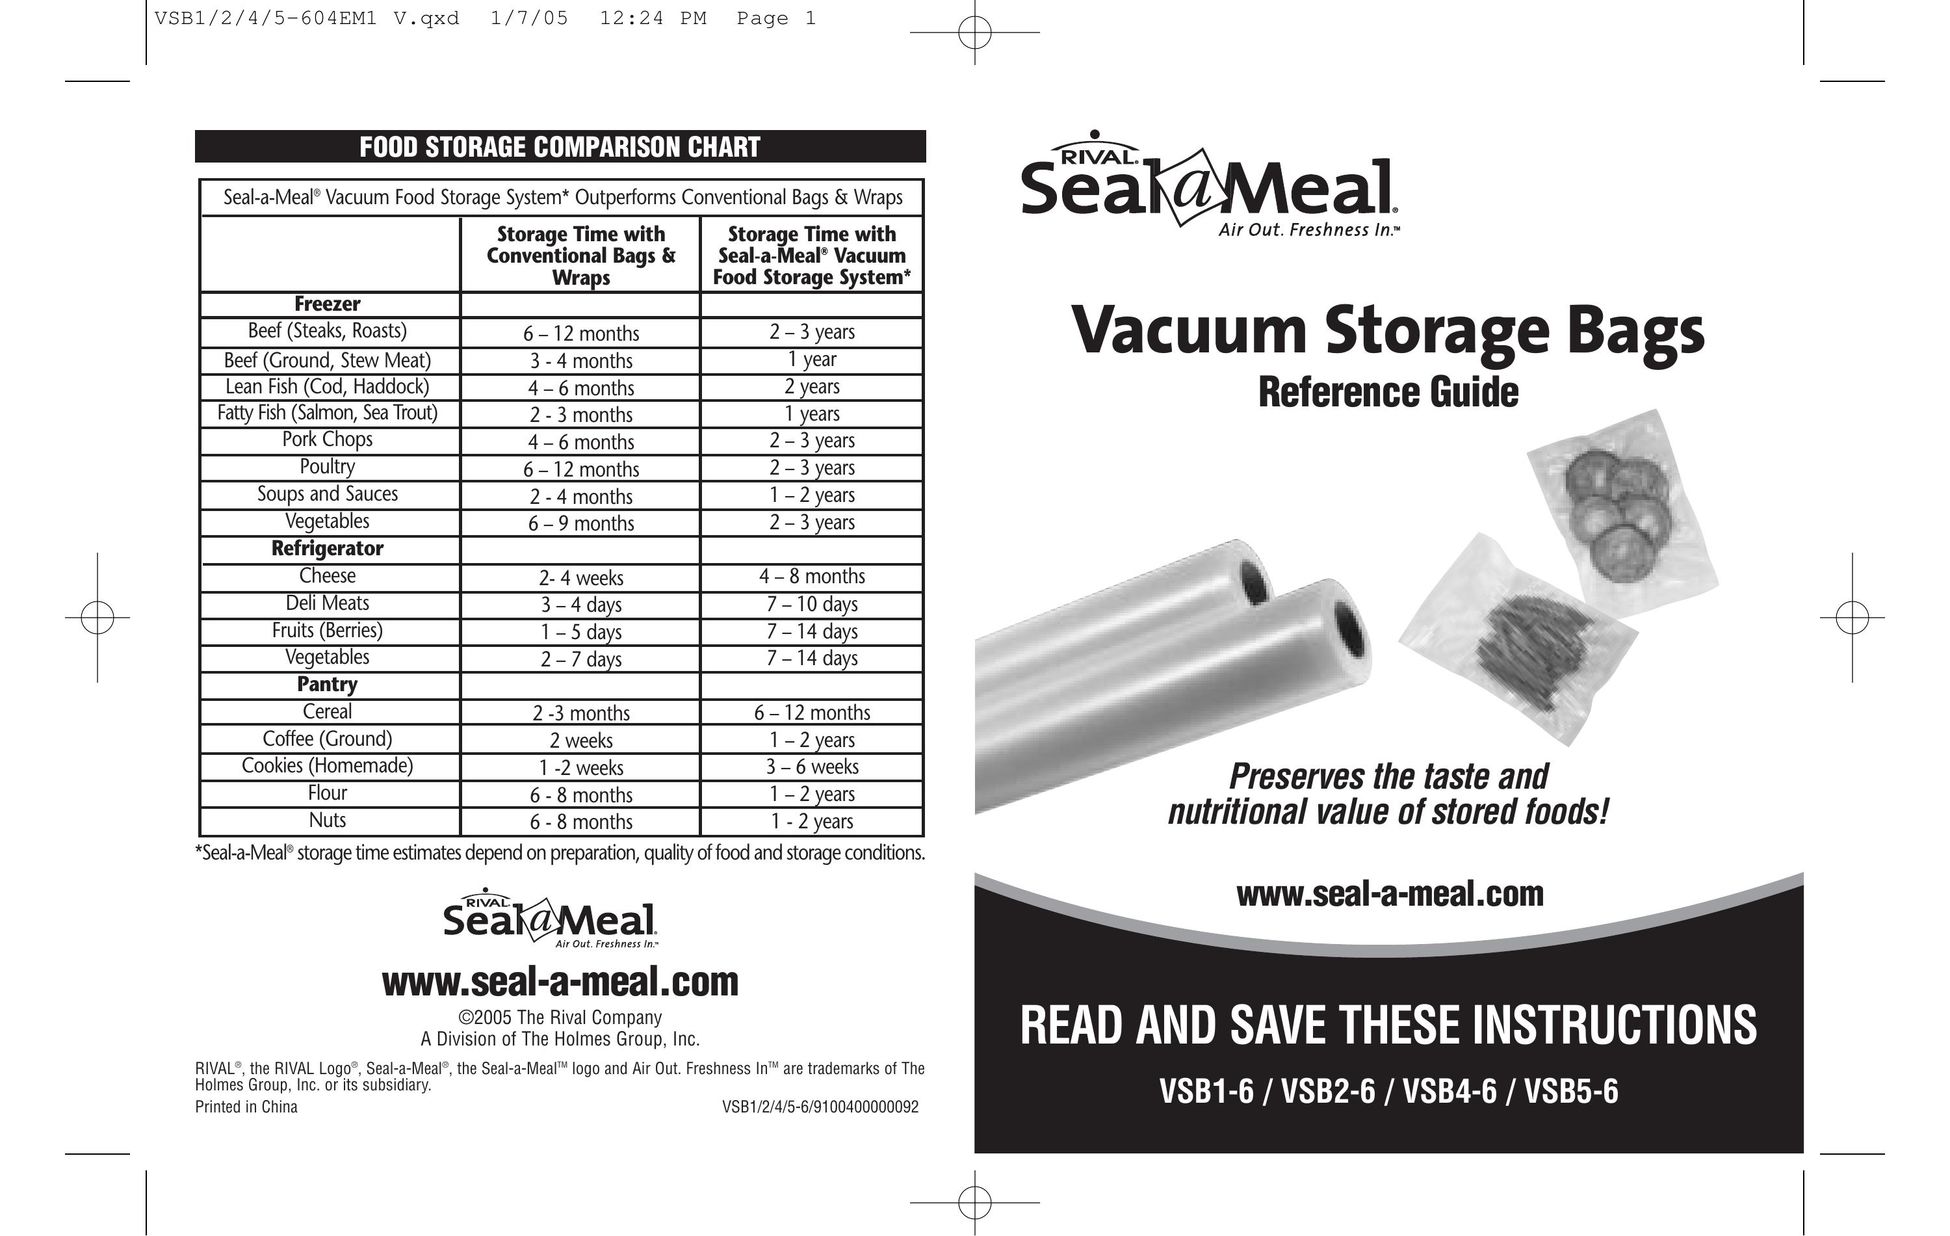 Seal-a-Meal VSB2-6 Food Saver User Manual